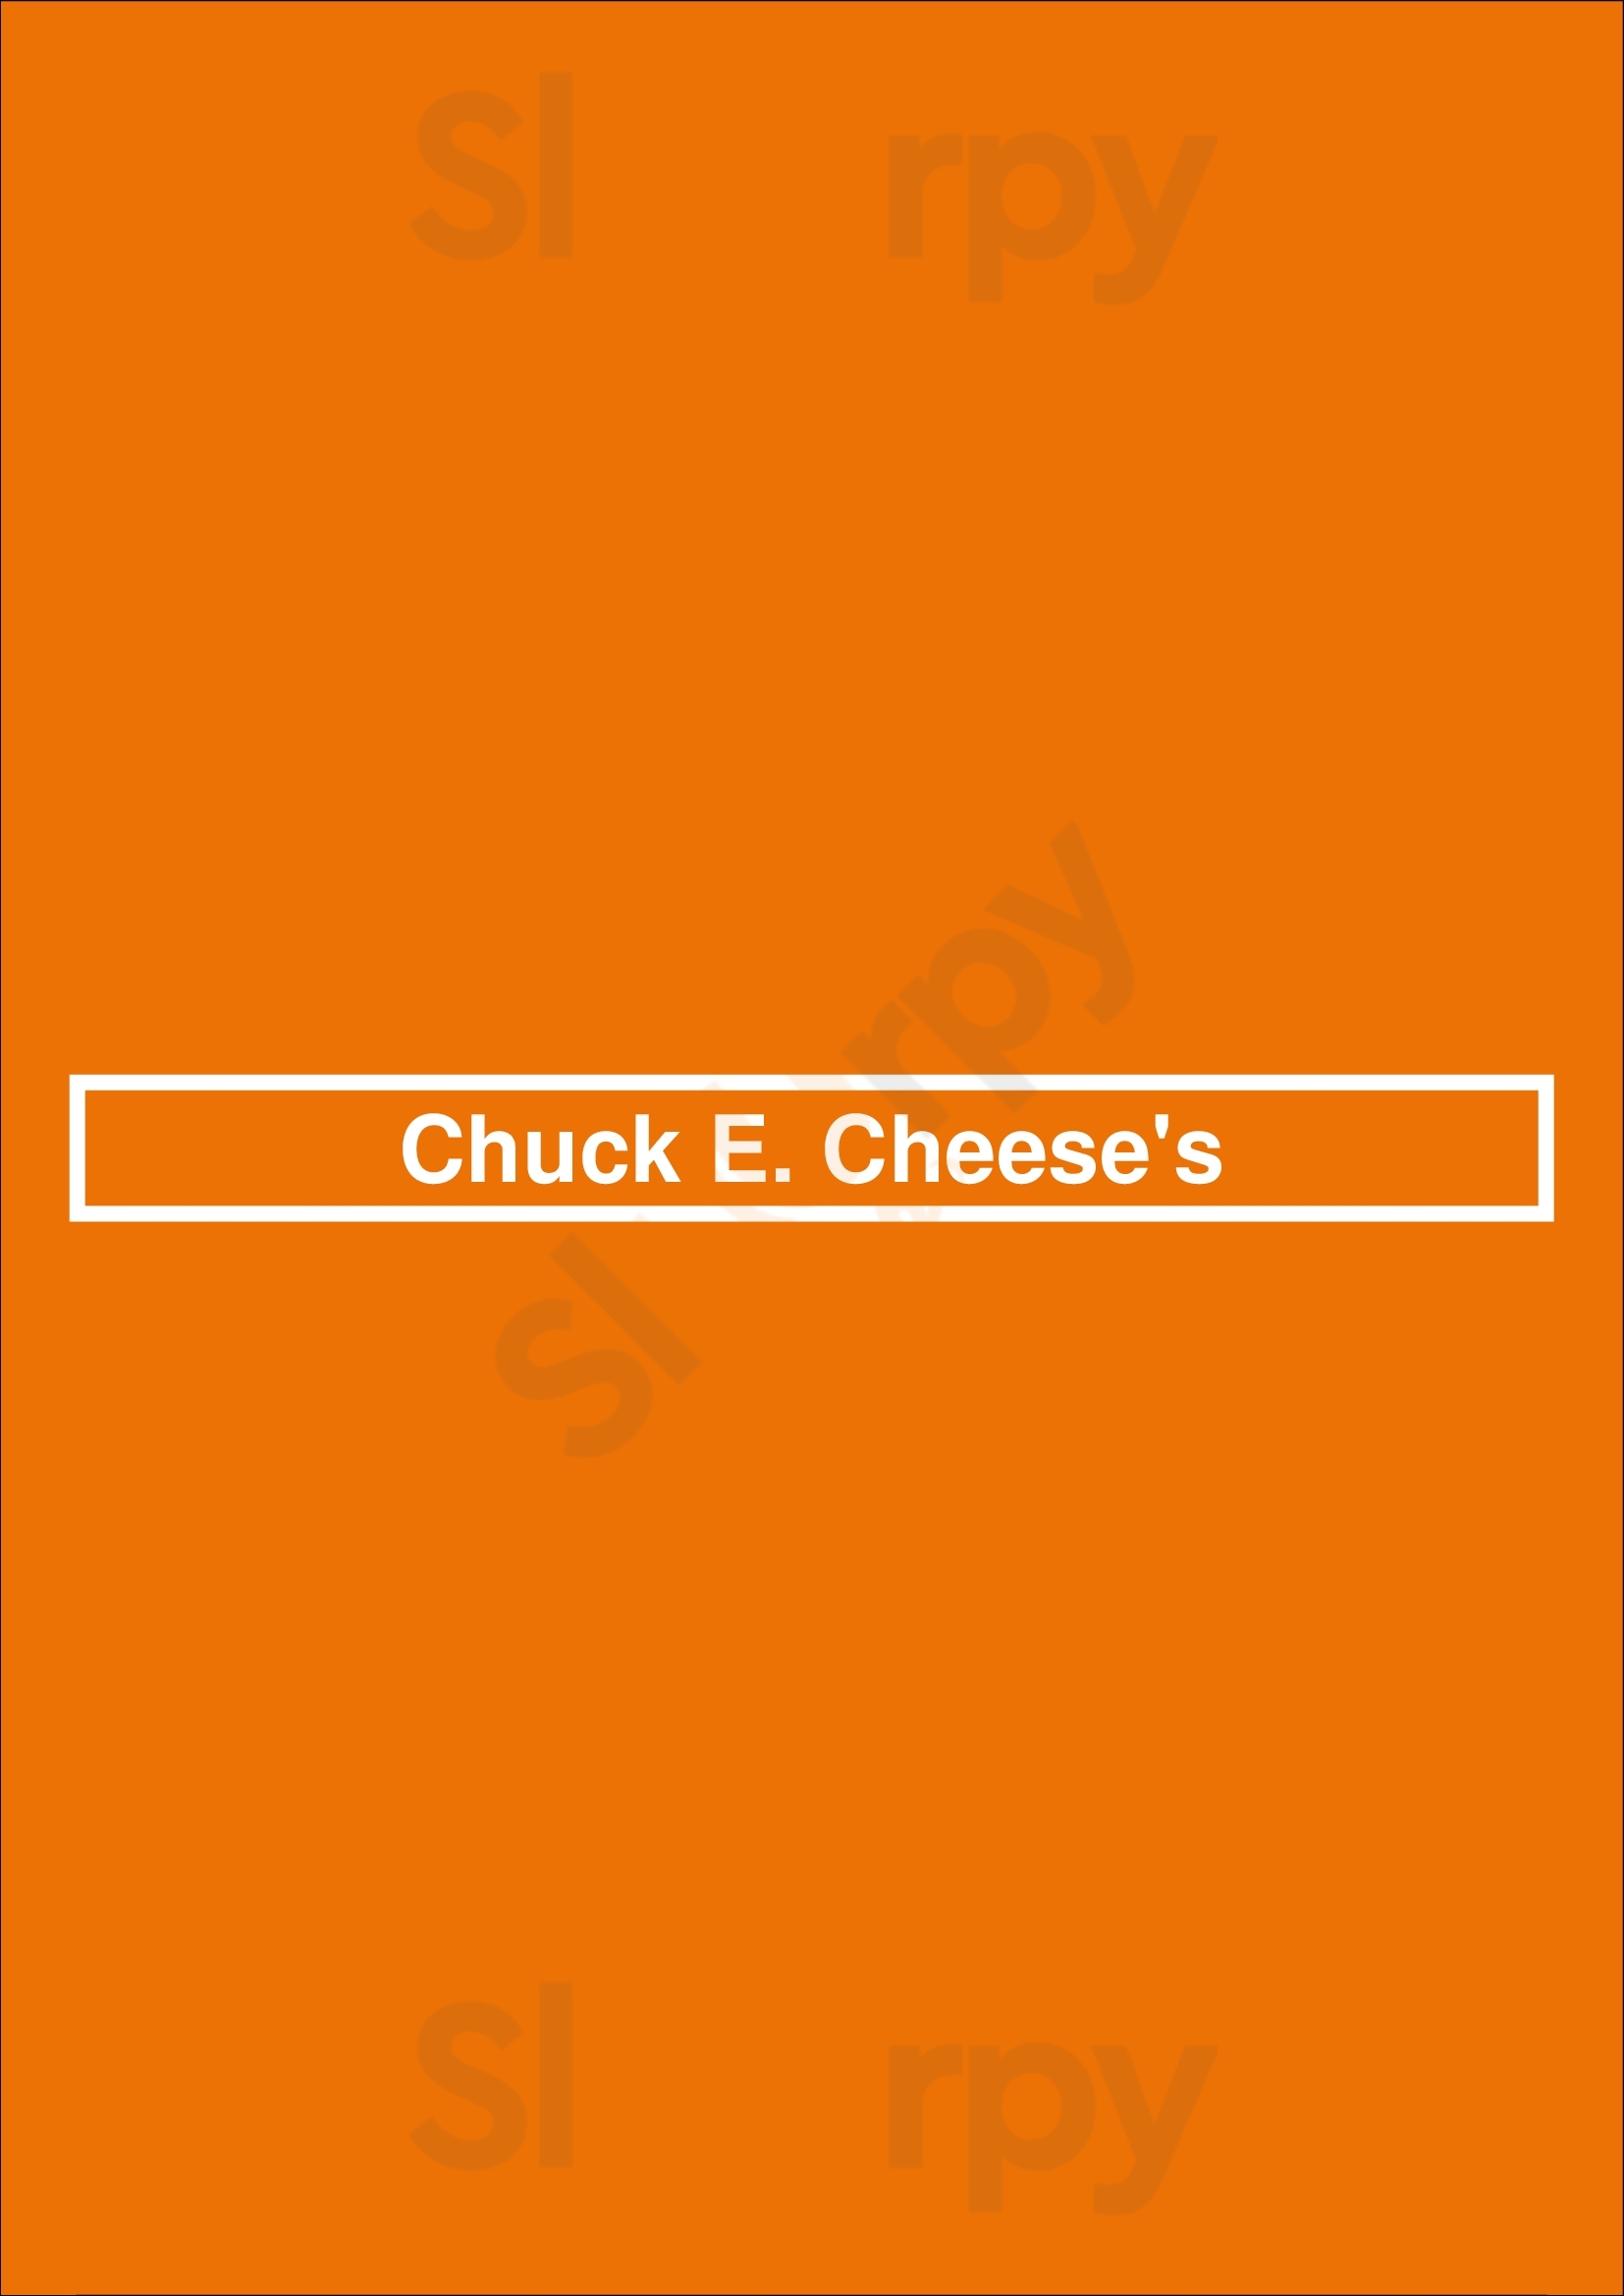 Chuck E. Cheese Corpus Christi Menu - 1